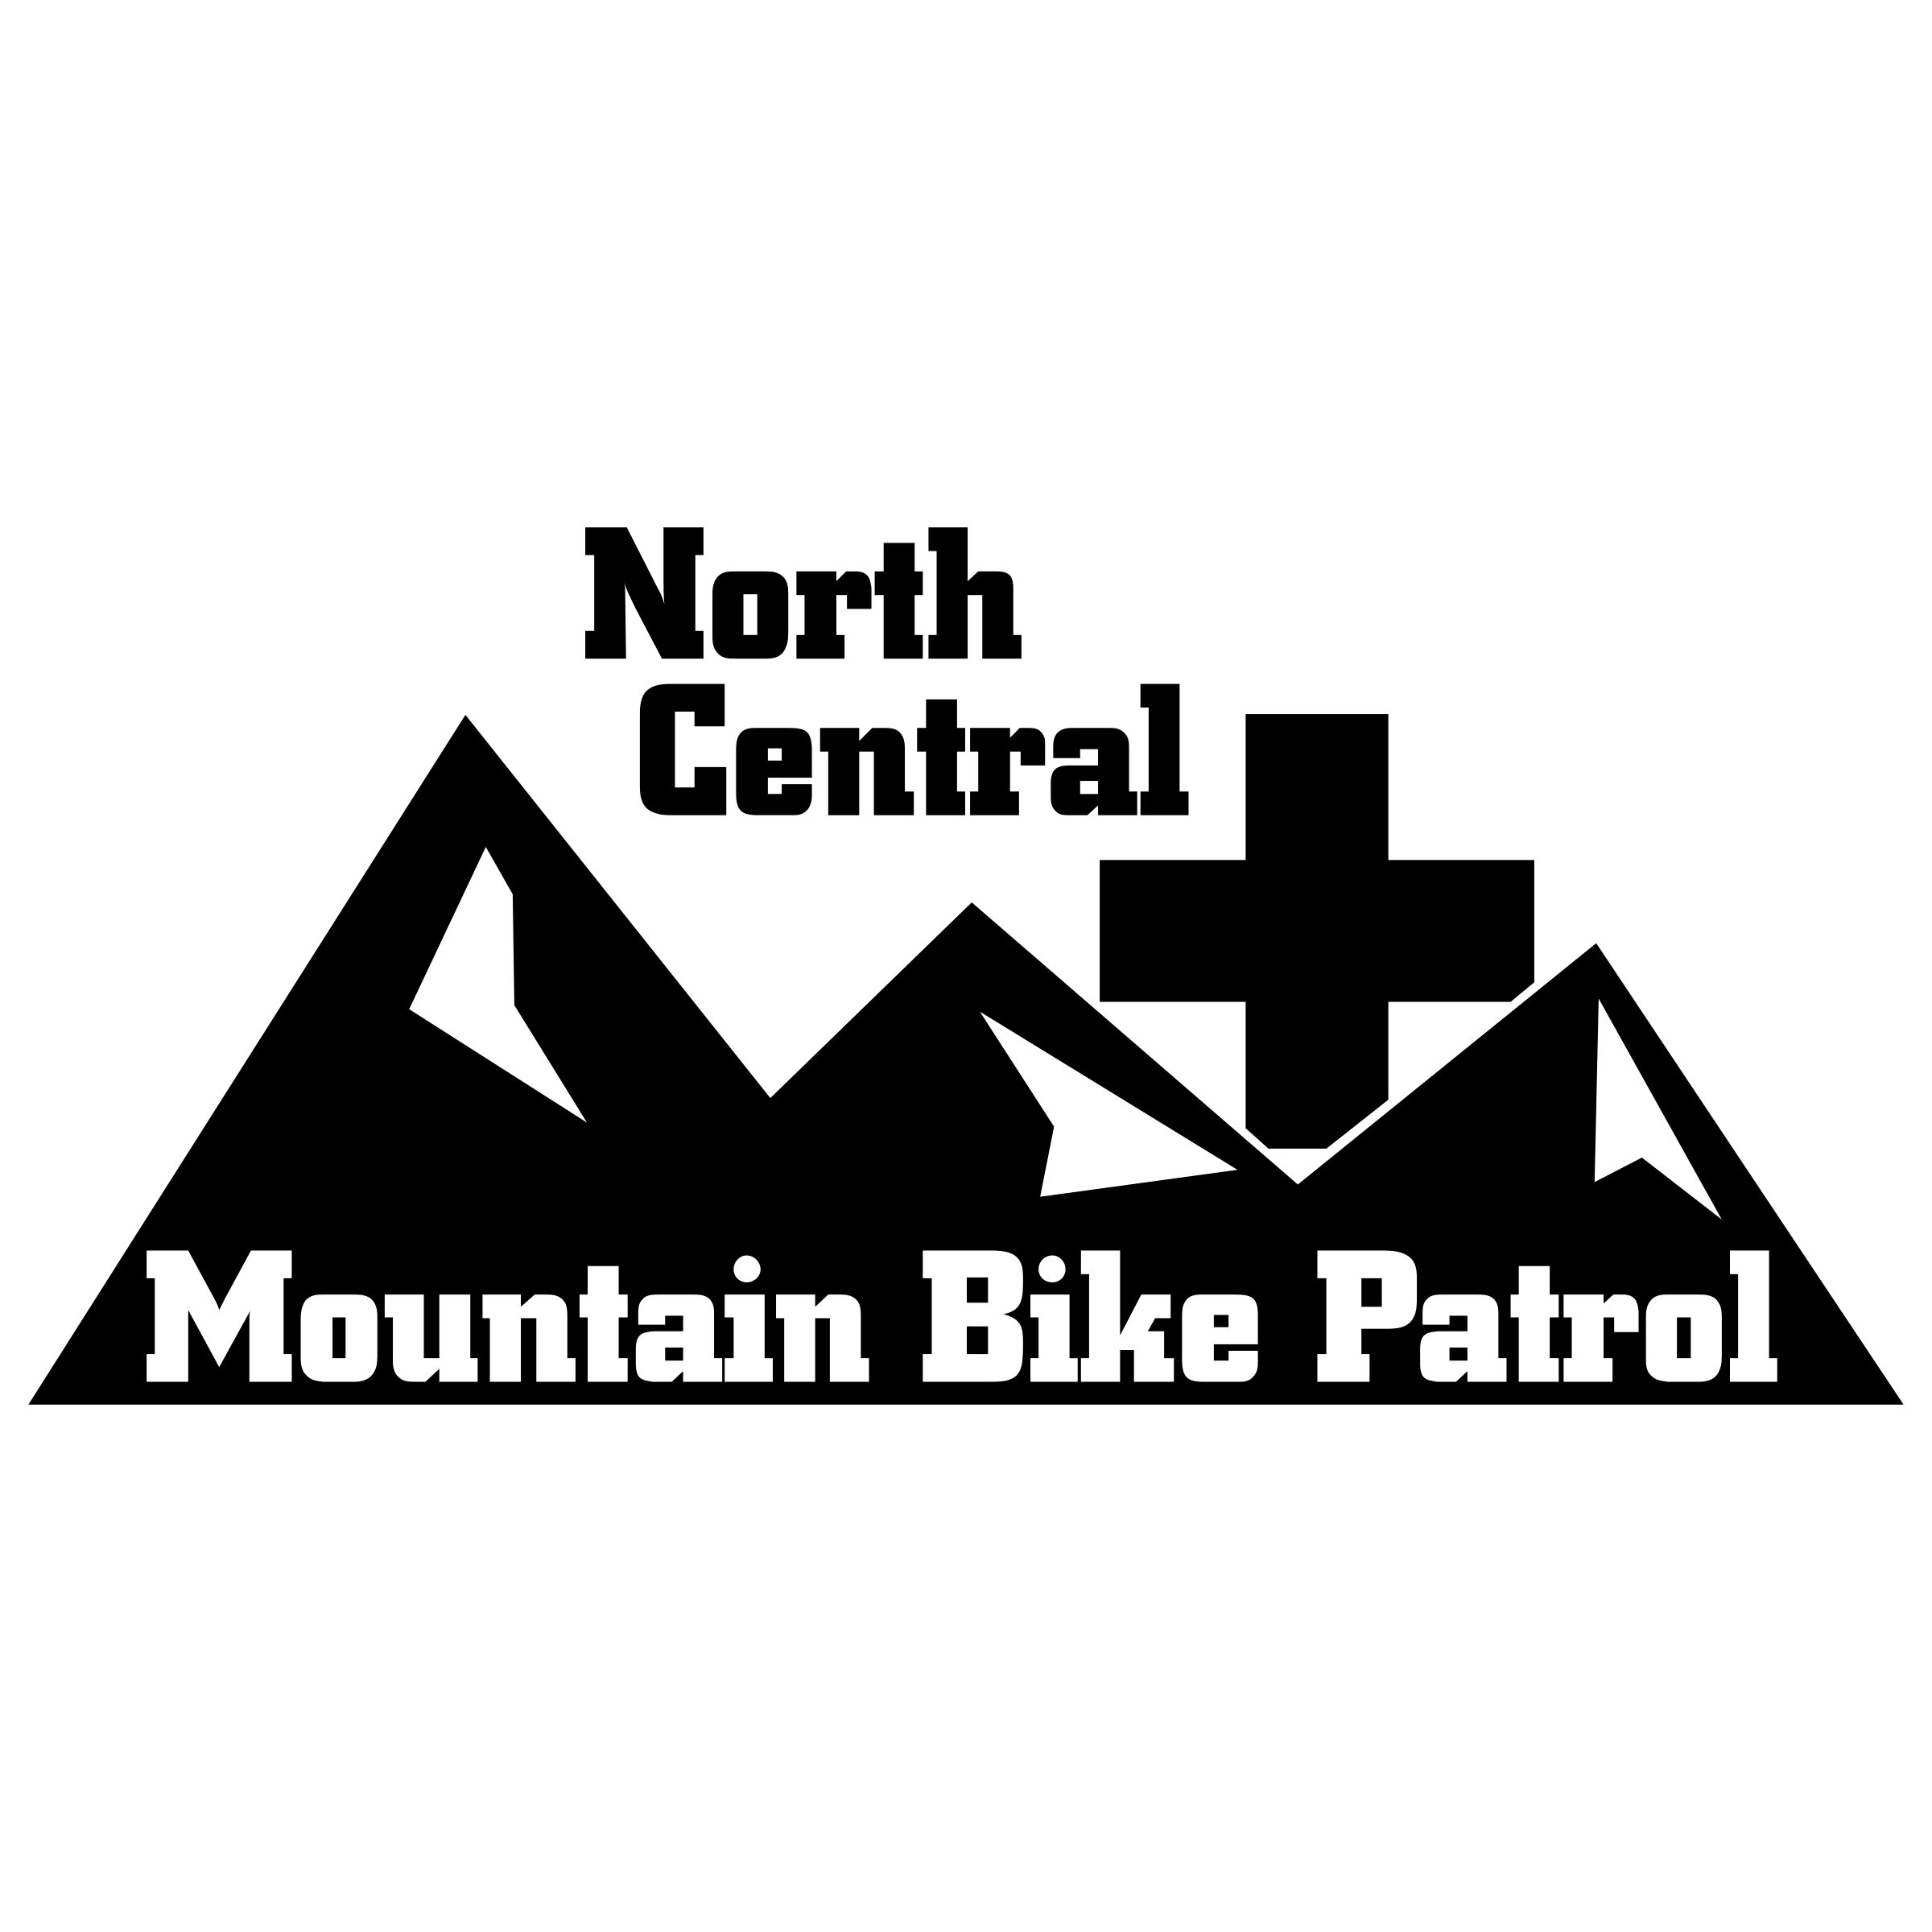 Central Mountain Logo - North Central Mountain Bike Patrol Logo PNG Transparent & SVG Vector ...